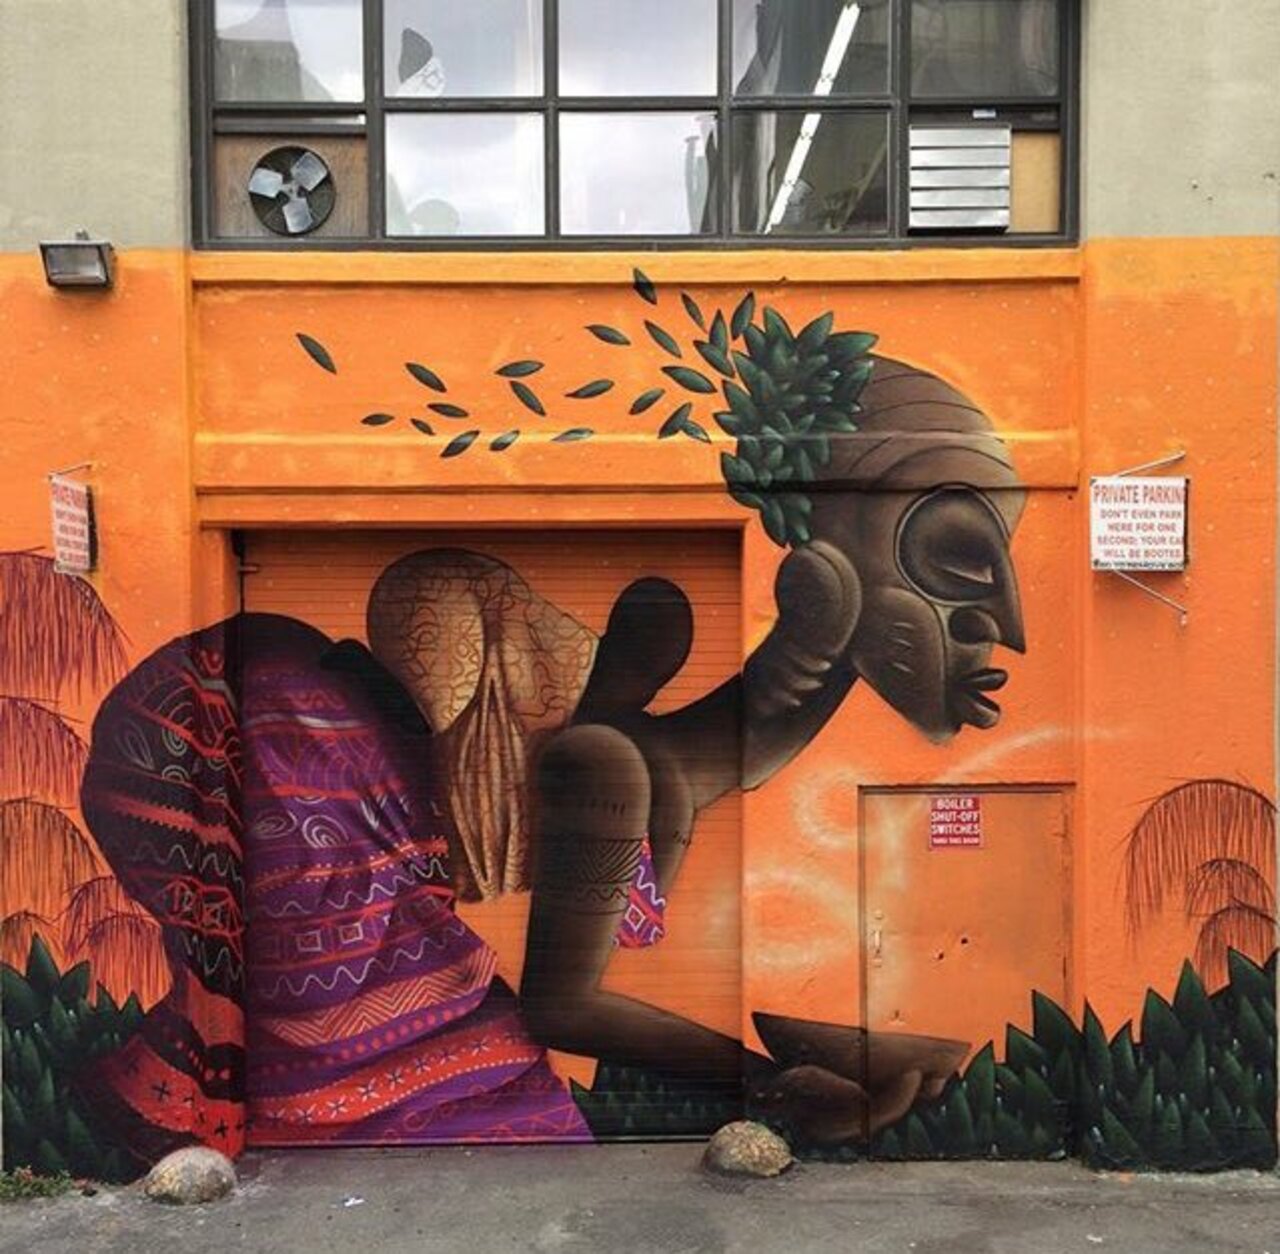 New Street Art by Alexandre Keto in NYC 

#art #graffiti #mural #streetart https://t.co/9hJPCvJtJl